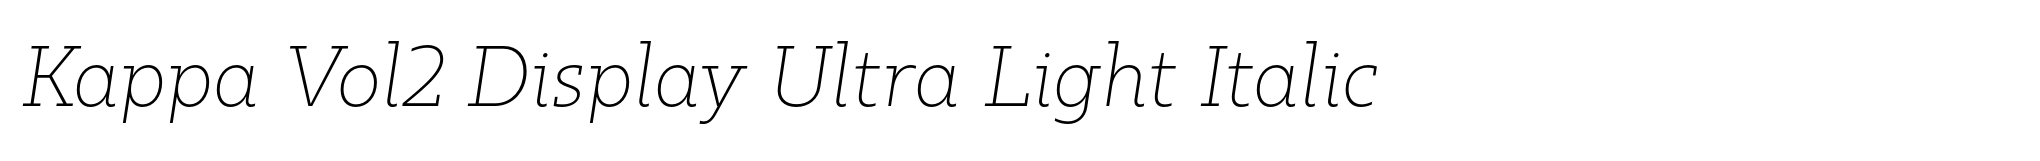 Kappa Vol2 Display Ultra Light Italic image